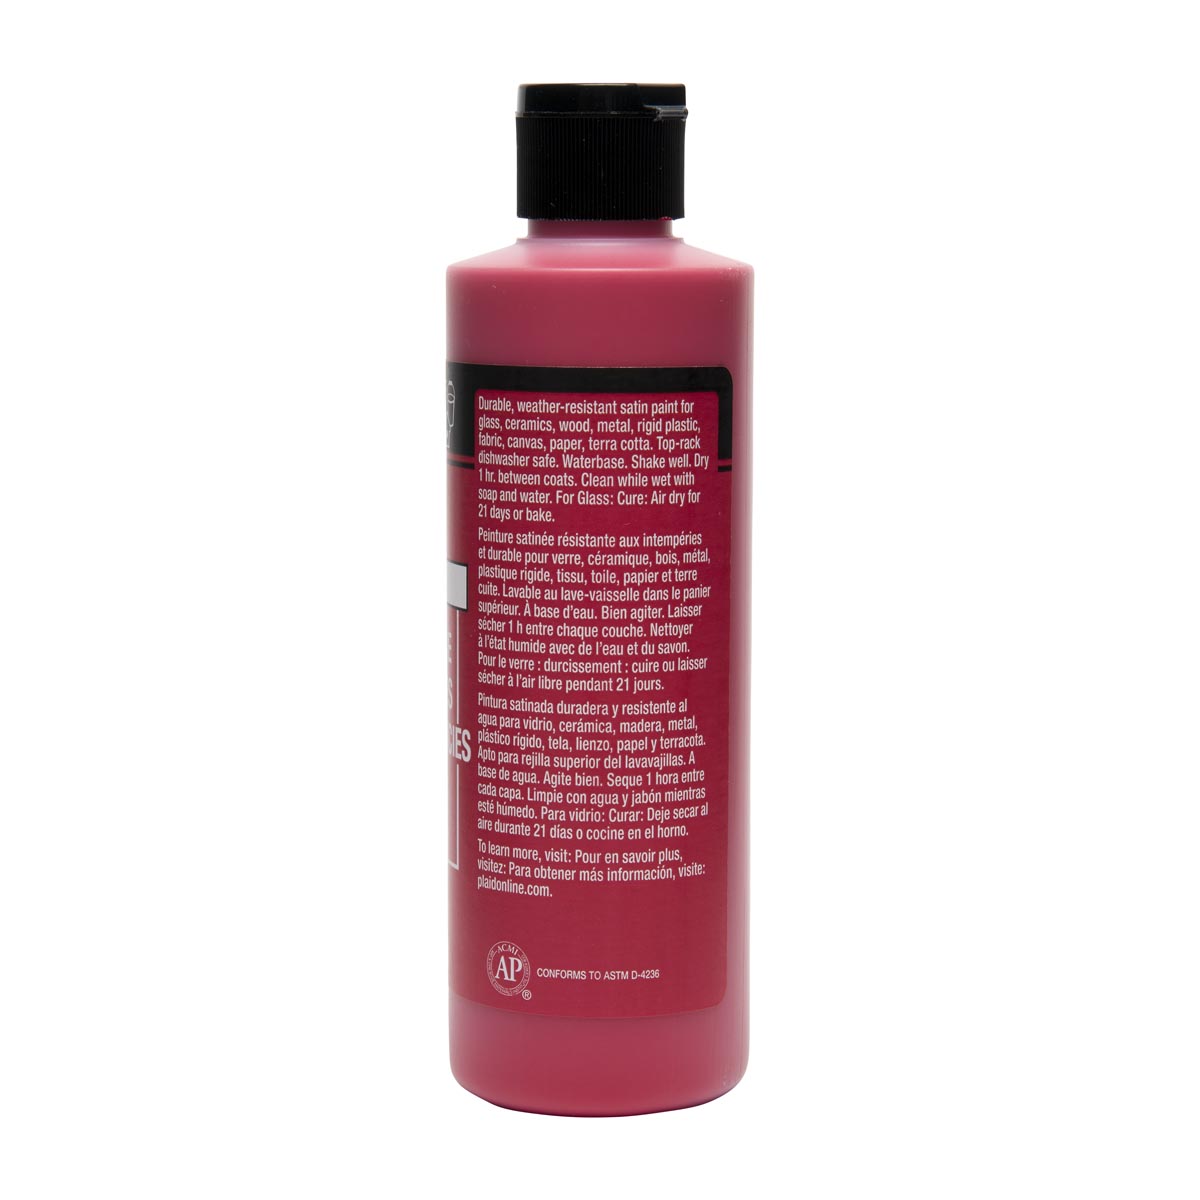 FolkArt ® Multi-Surface Satin Acrylic Paints - Apple Red, 8 oz. - 4647